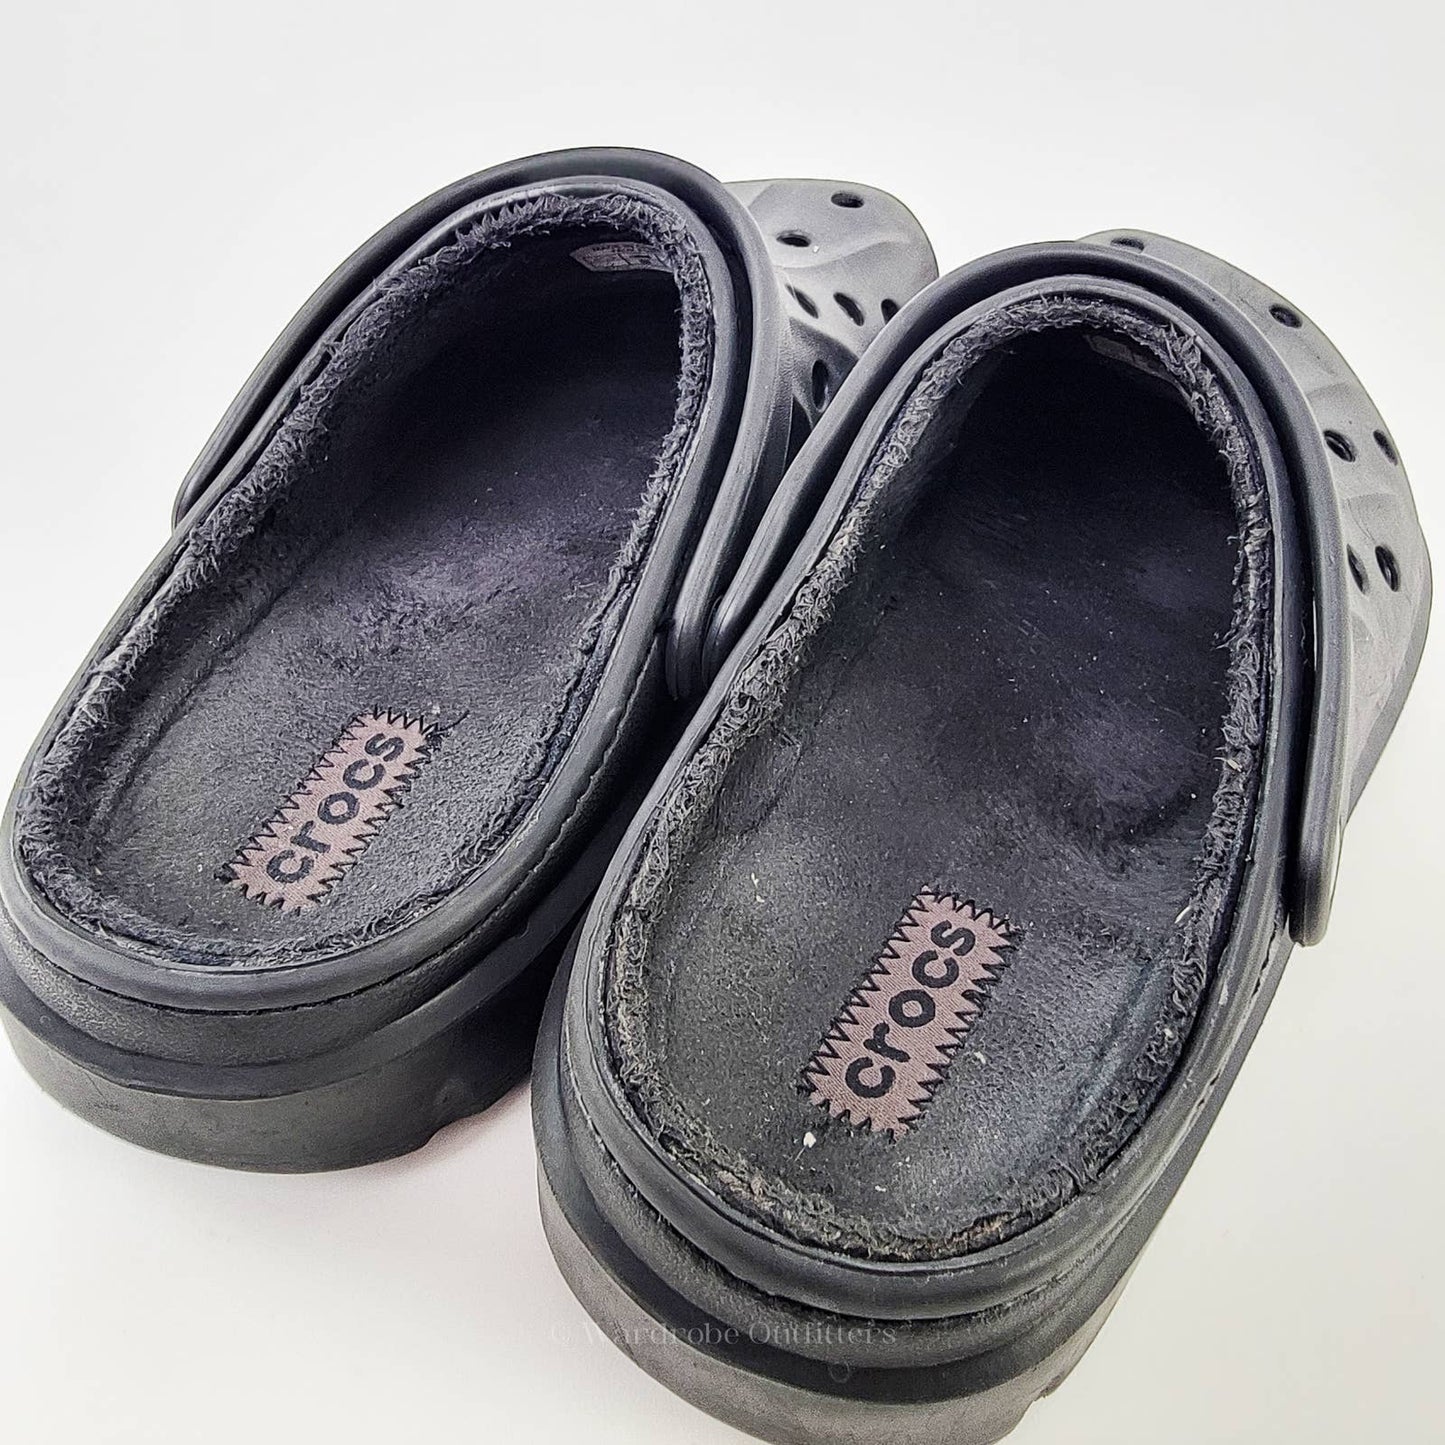 Crocs Dasher Classic Fur Lined Slingback Clog Sandals - 11